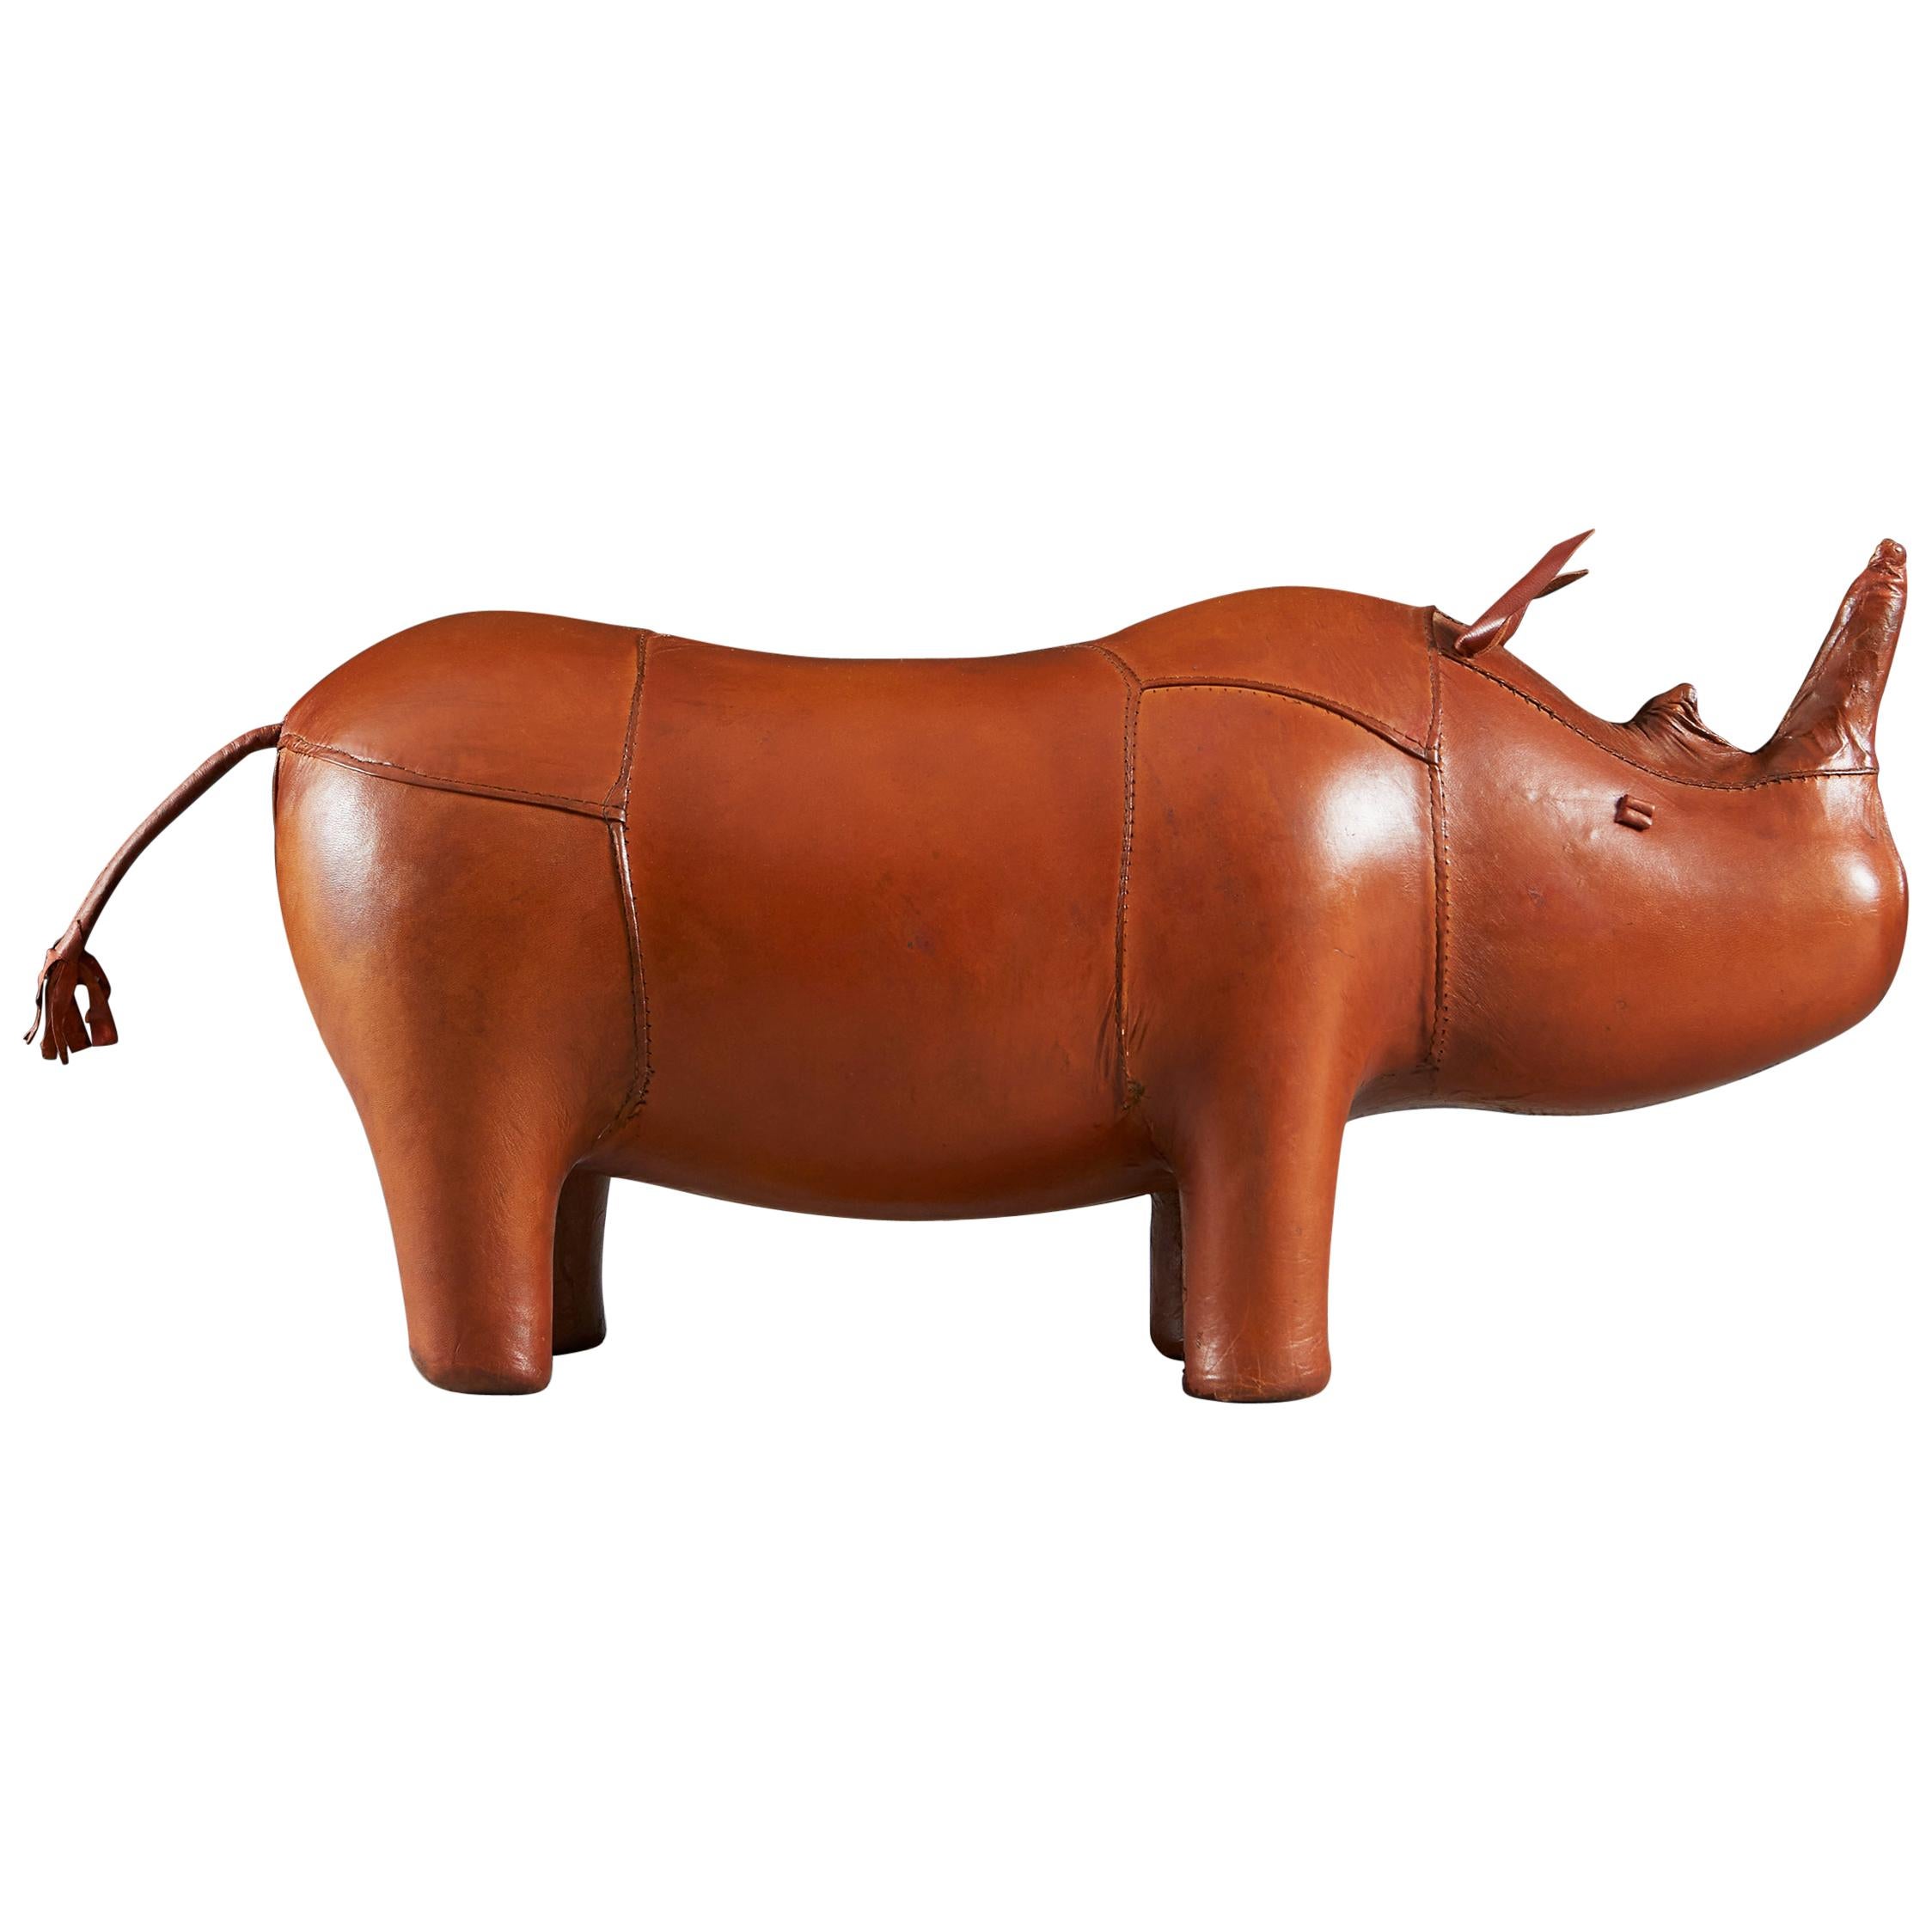 Leather Rhinoceros Footstool or Rhino by Dimitri Omersa for Liberty